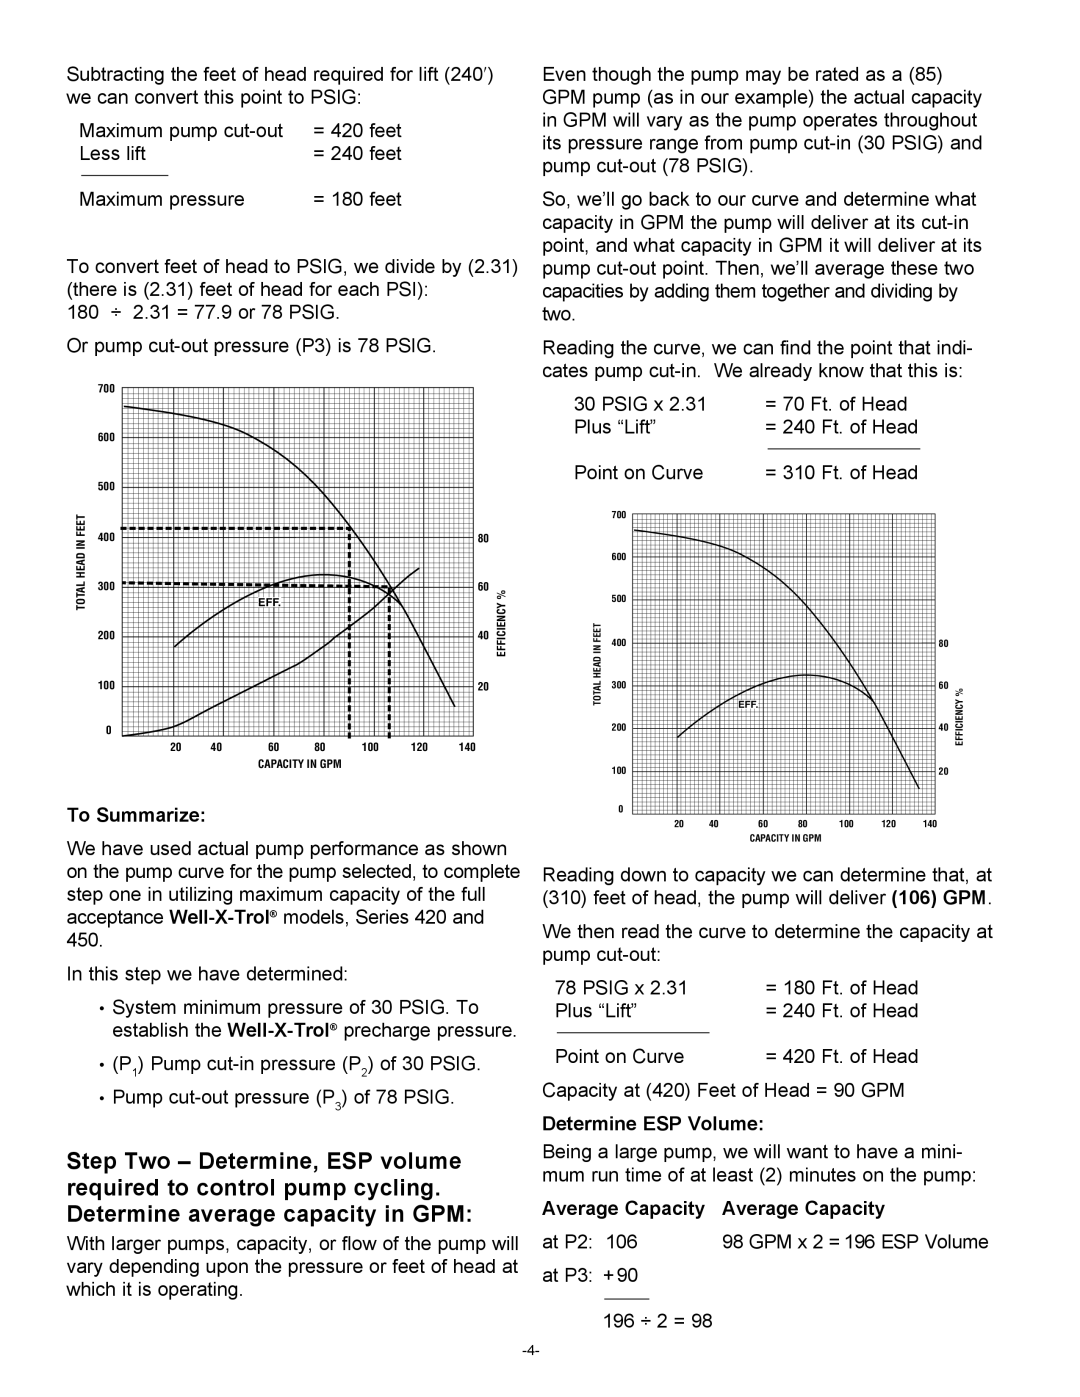 Amtrol 420, WX-401 manual To Summarize, Determine ESP Volume, Average Capacity, GPM x 2 = 196 ESP Volume, Total Head In Feet 